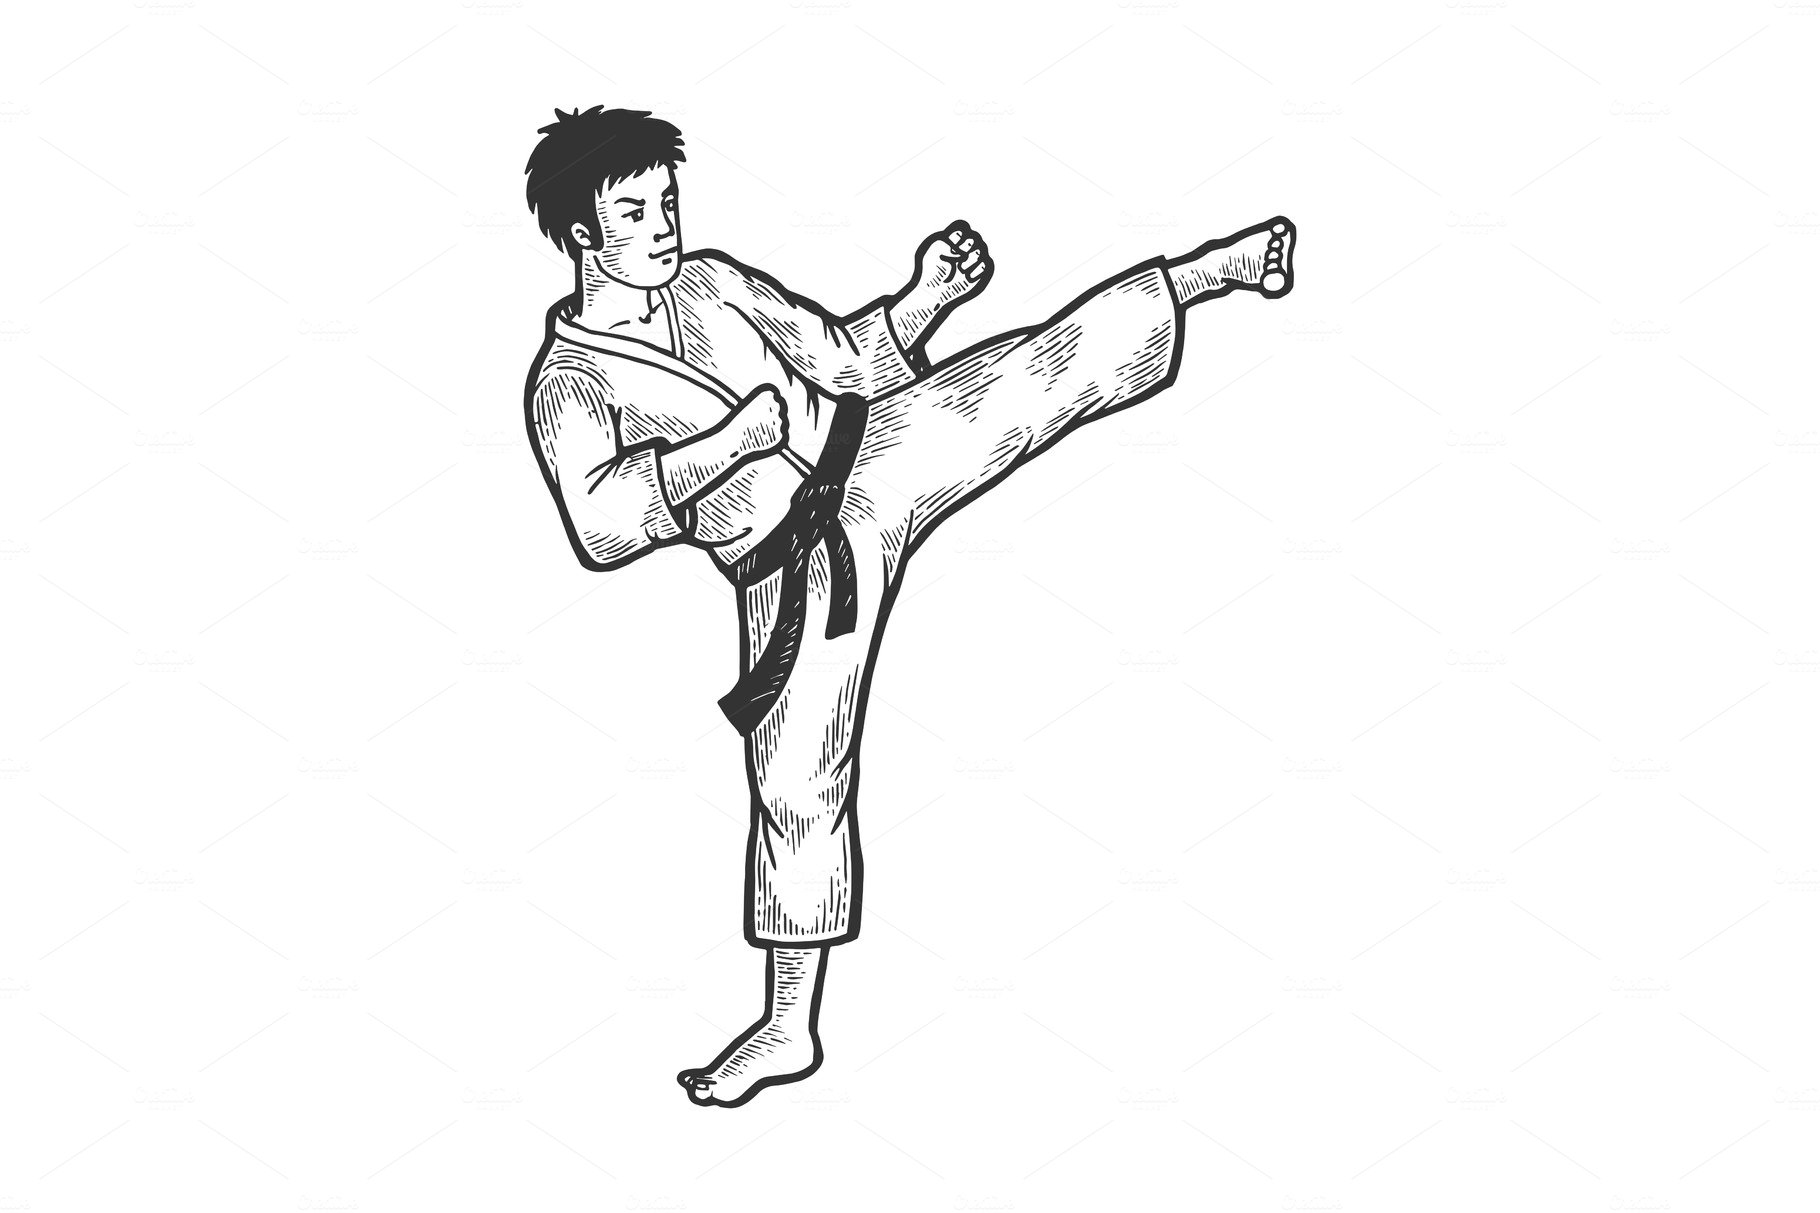 Karate strikes foot sketch engraving cover image.